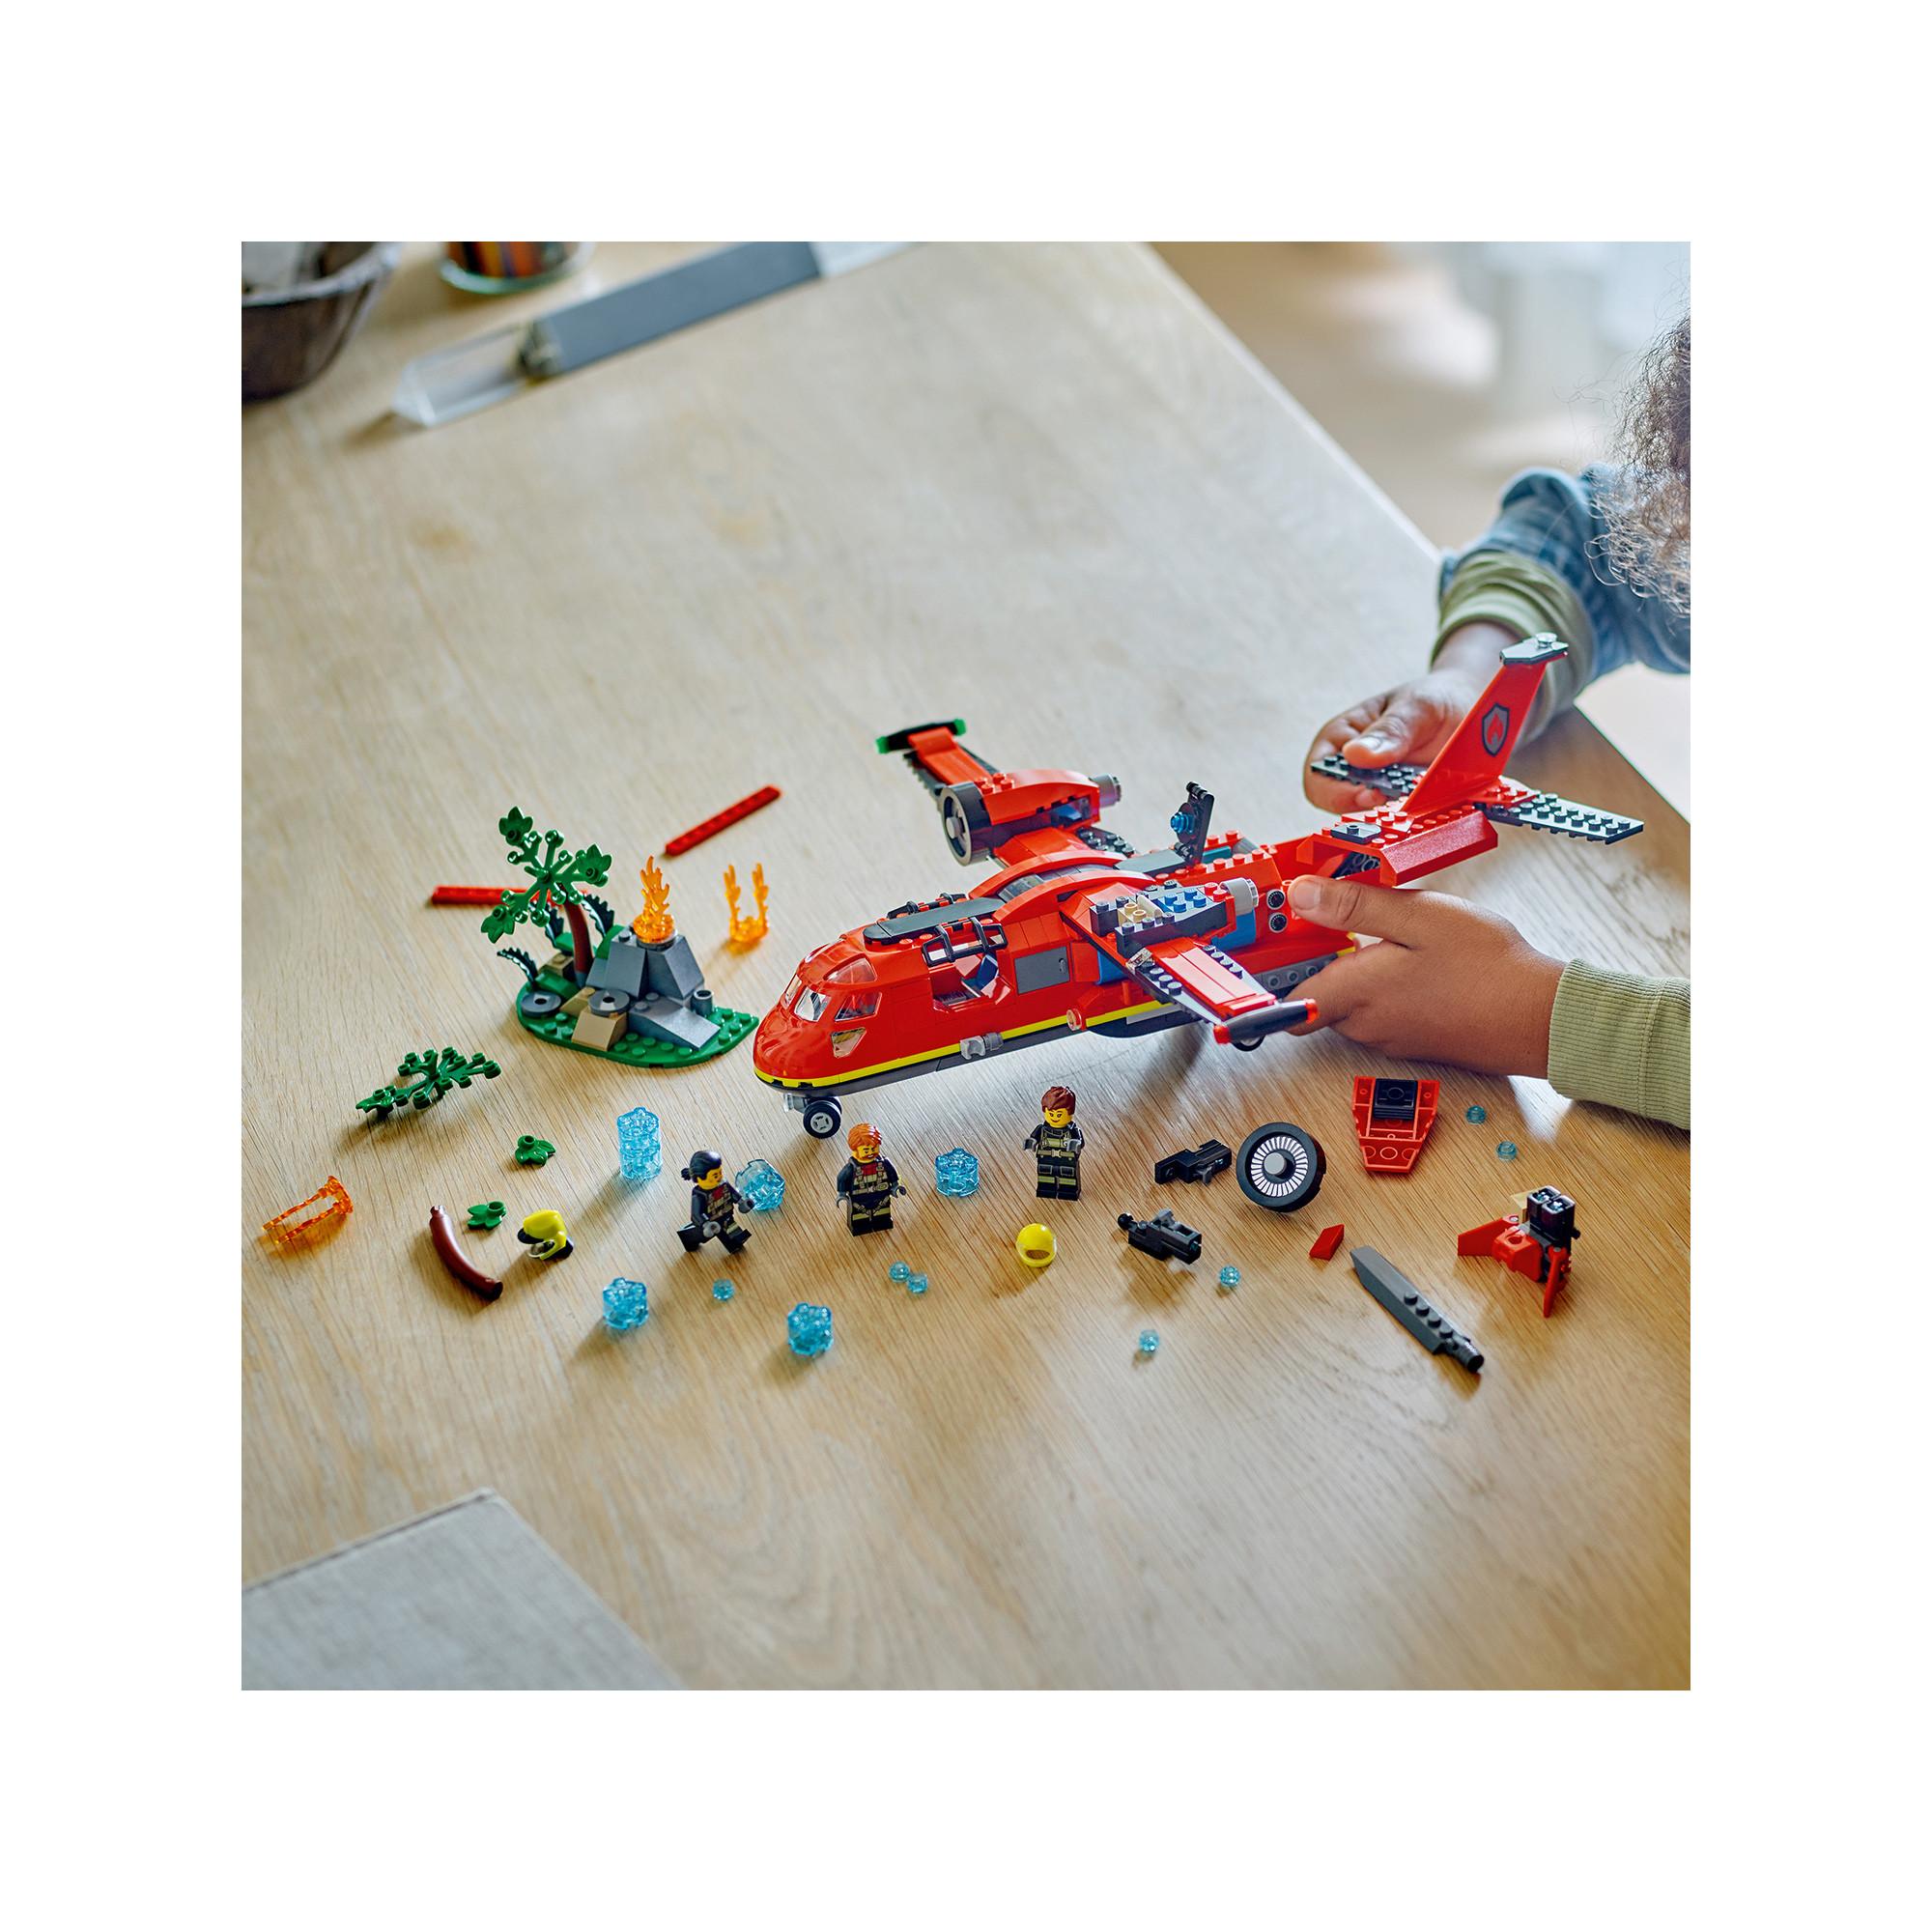 LEGO®  60413 Löschflugzeug 